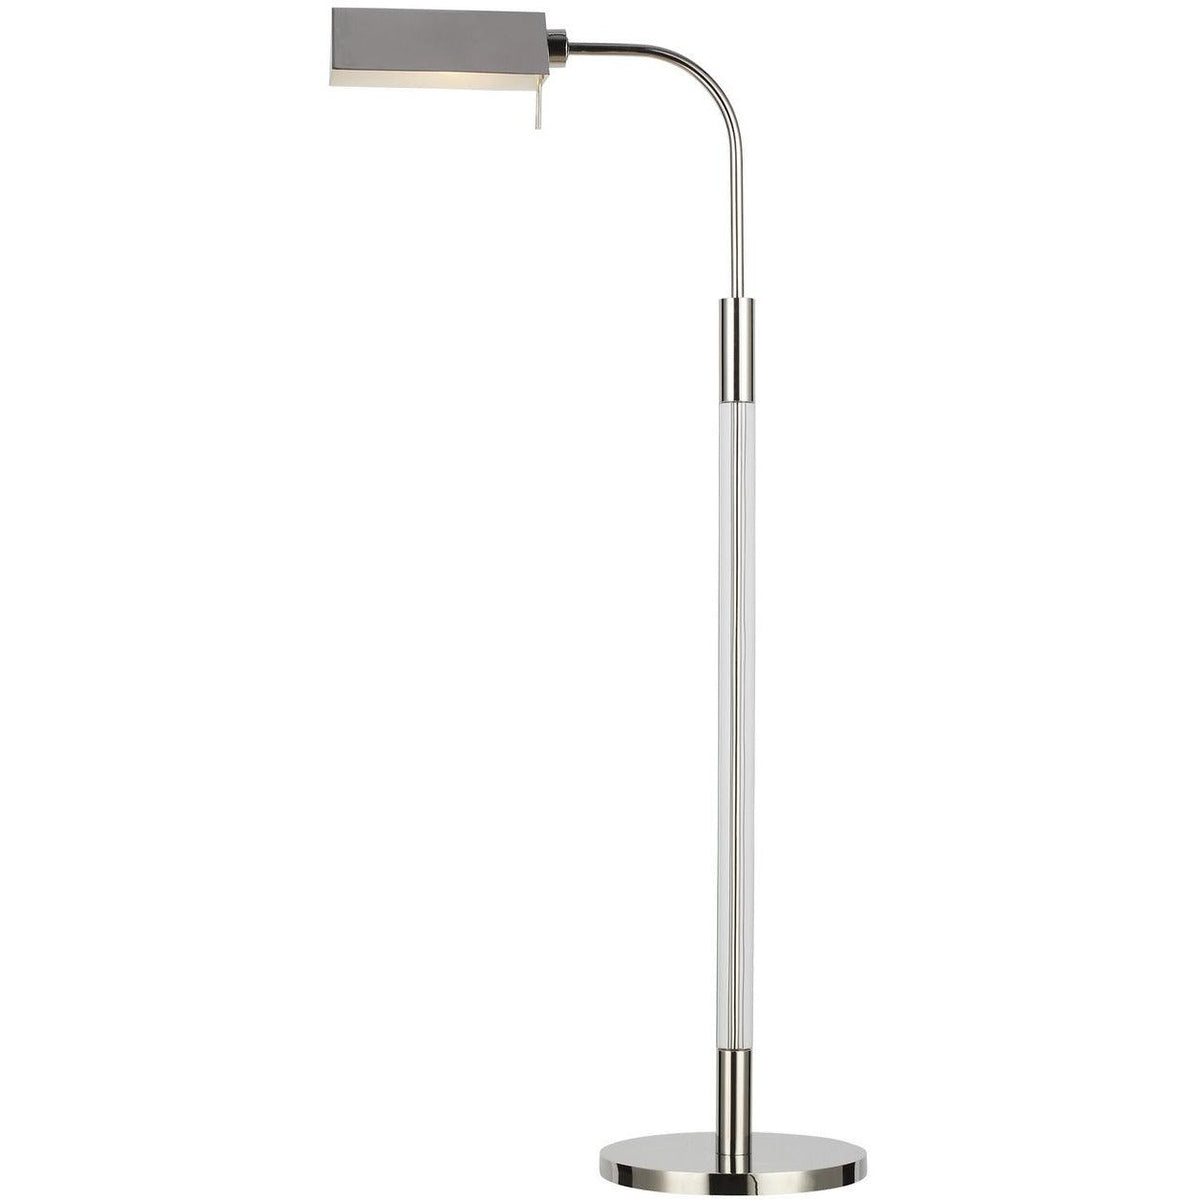 Clemente Floor Lamp - ARN1010